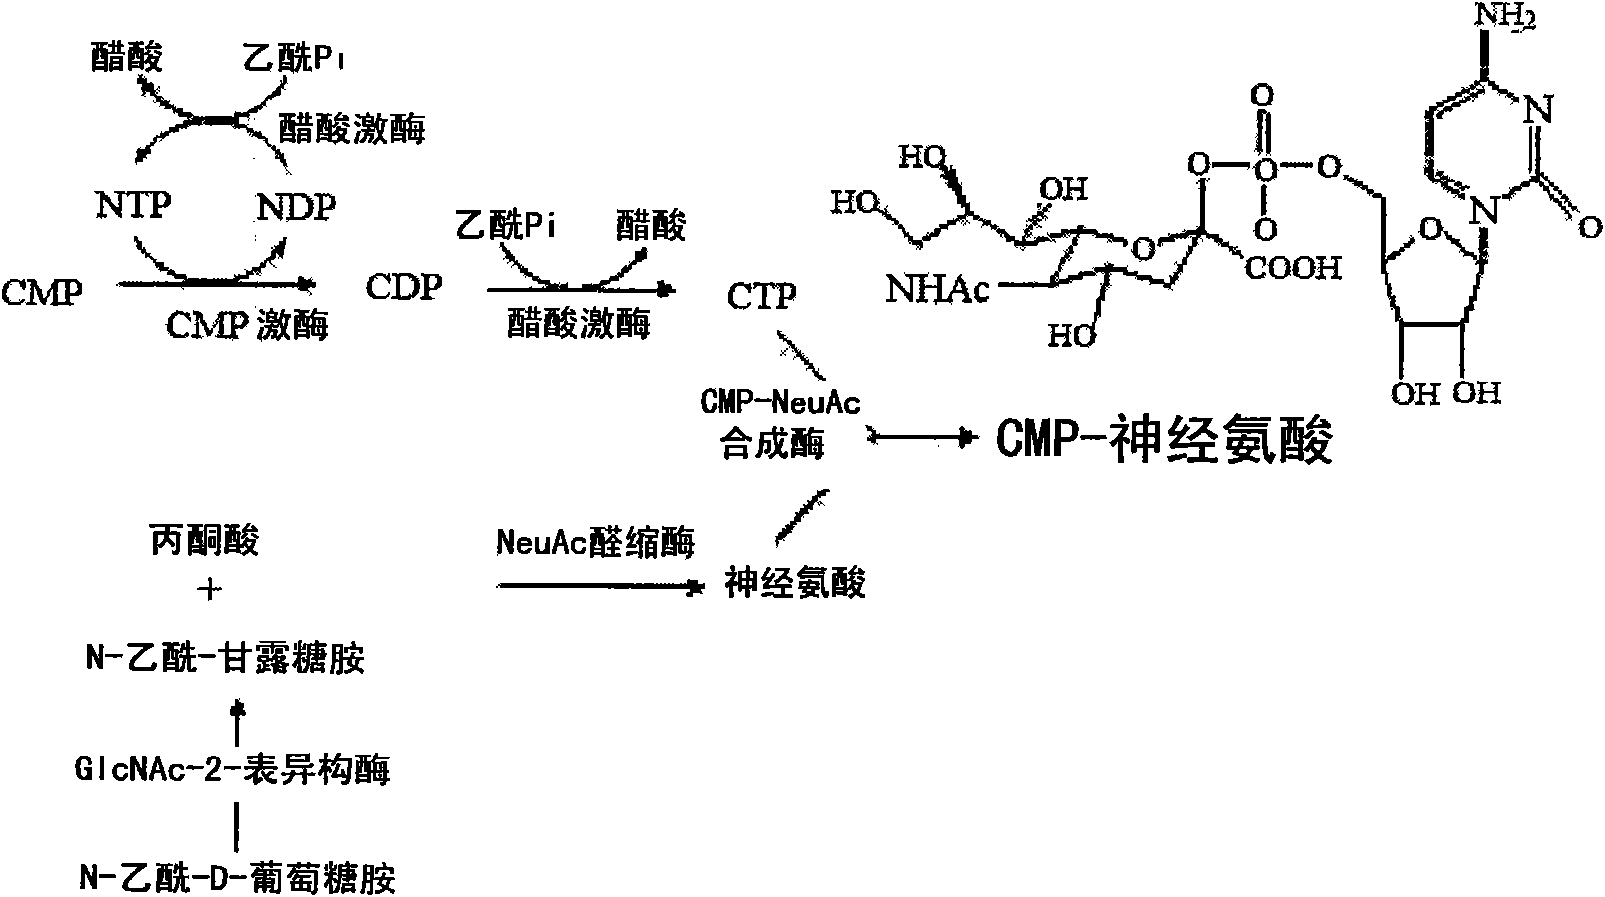 Novel n-acetylglucosamine-2-epimerase and method for producing cmp-neuraminic acid using the same